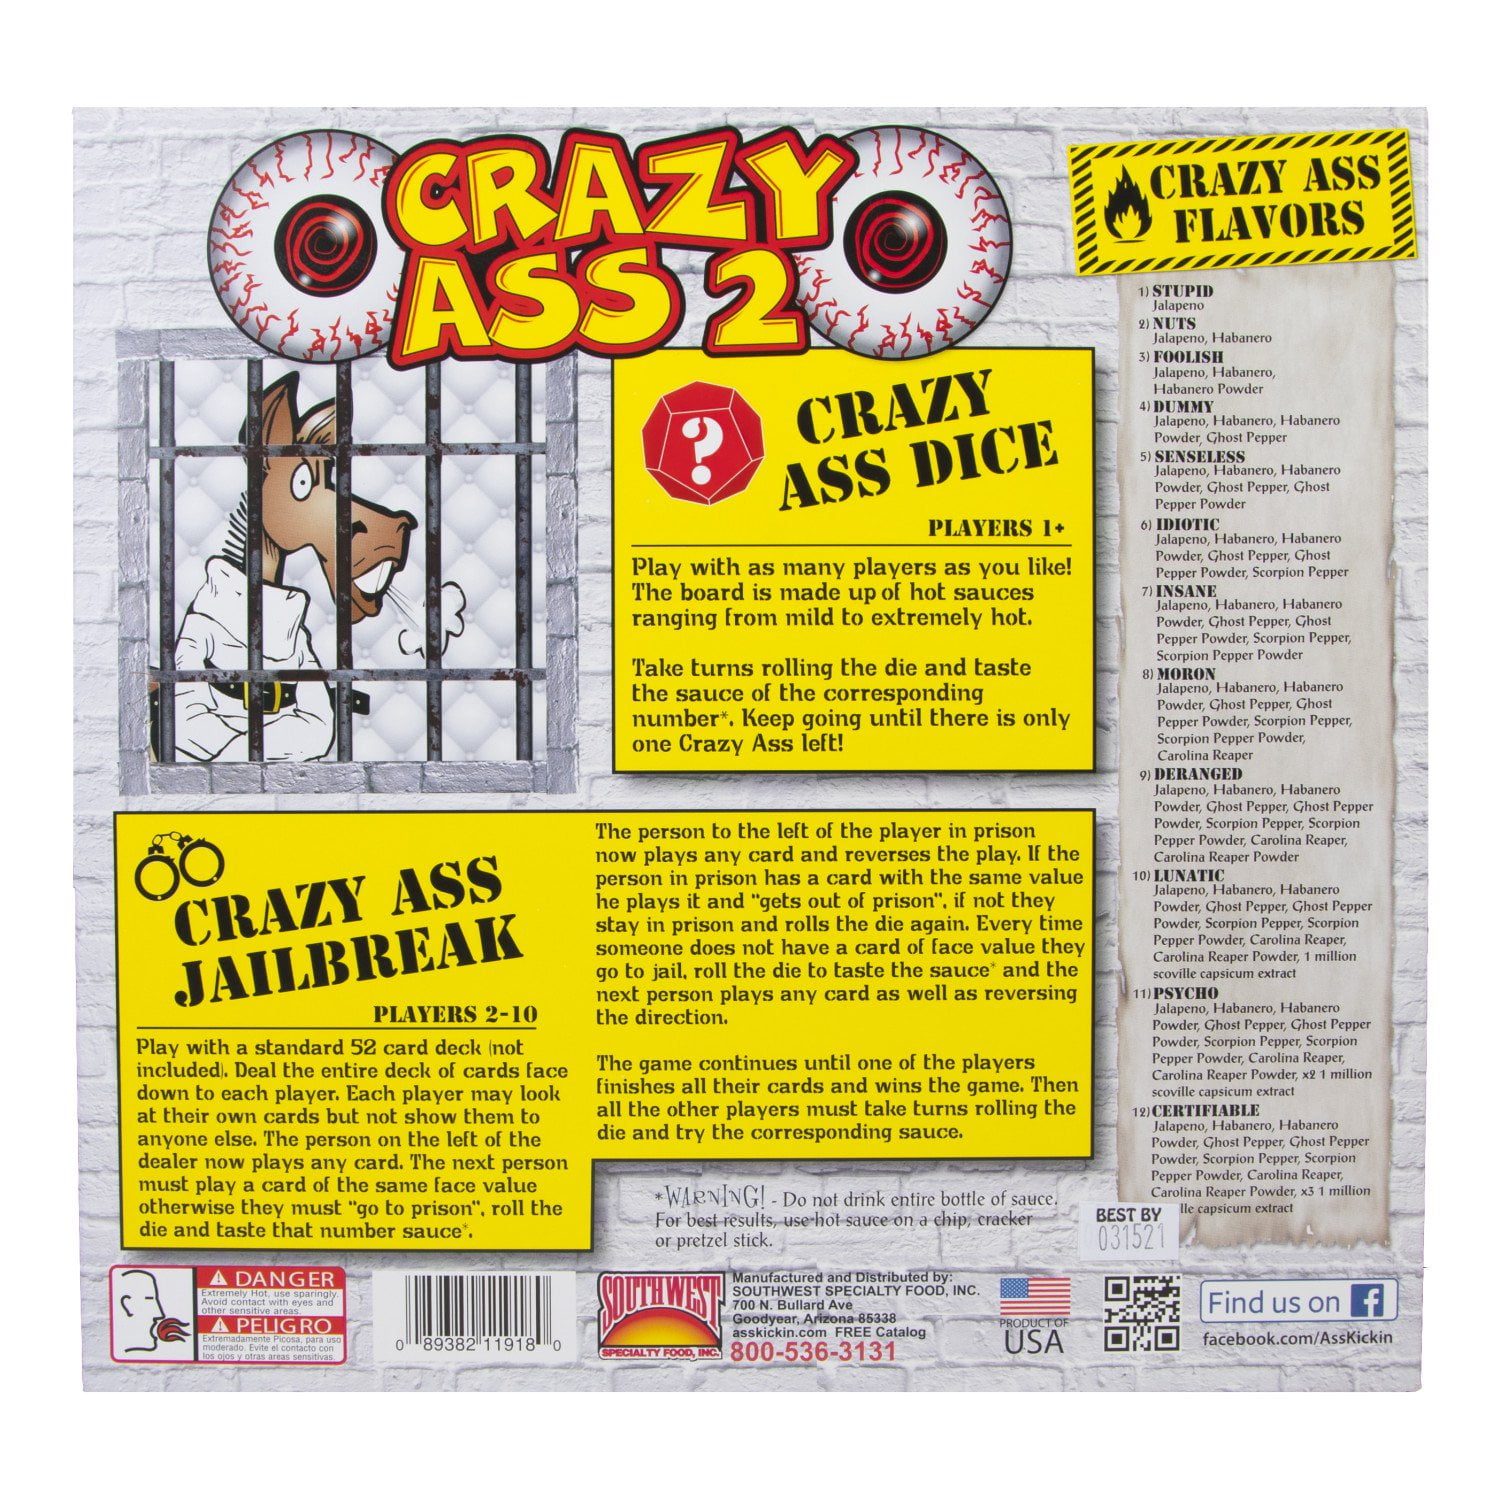 Crazy Ass 2 Hot Sauce Challenge Game - Cow Crack